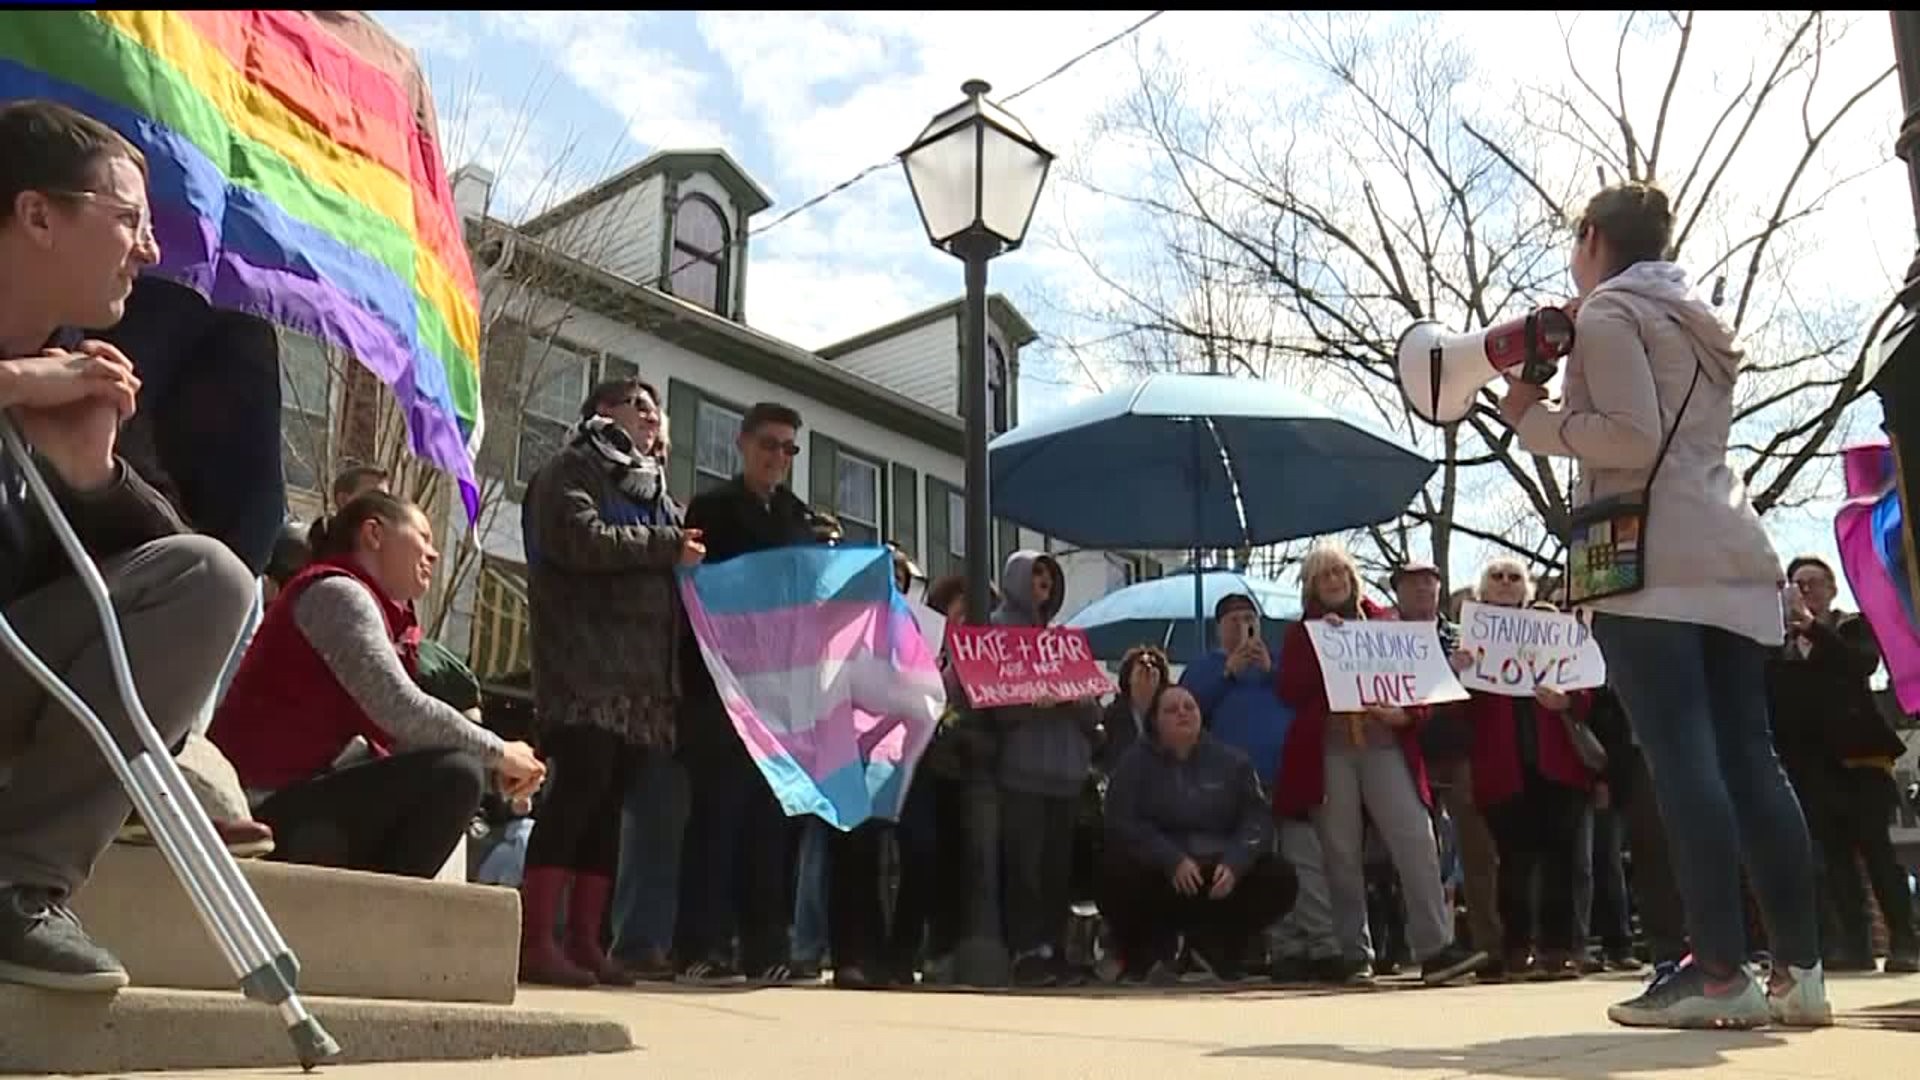 Star Barn Protestors Rally for LGBTQ Rights